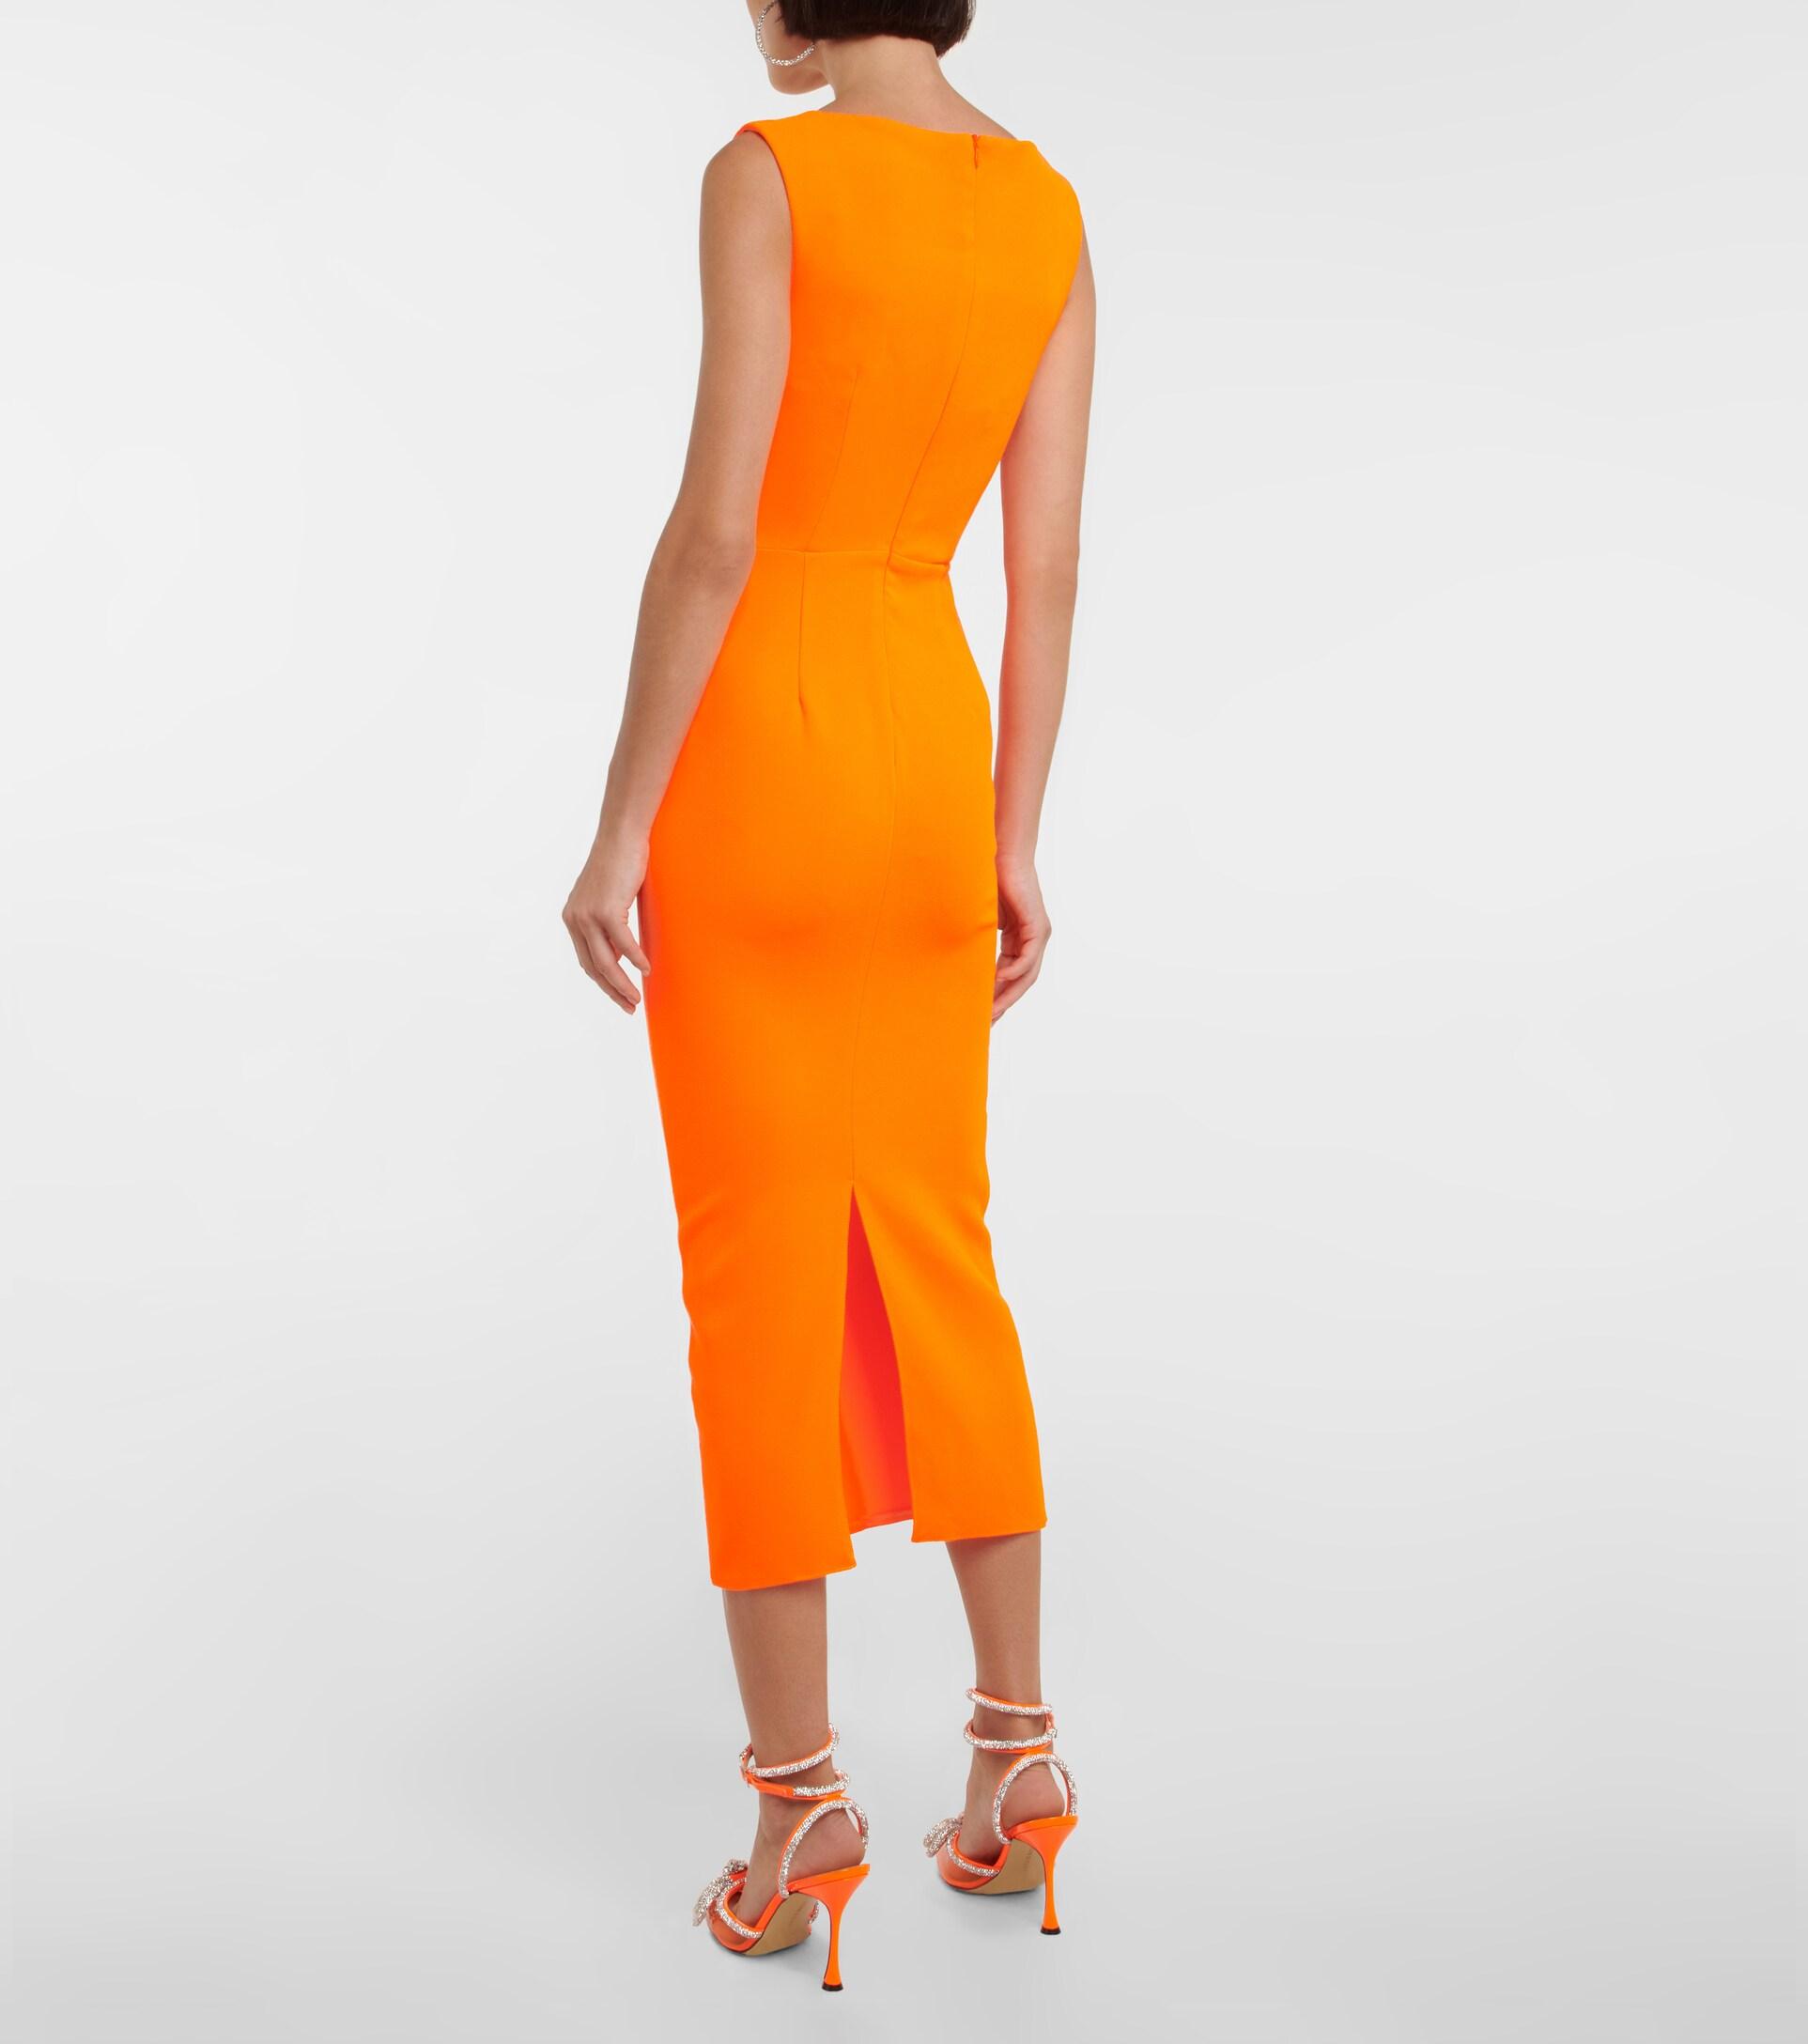 Alex Perry Claron Crepe Midi Dress in Orange | Lyst